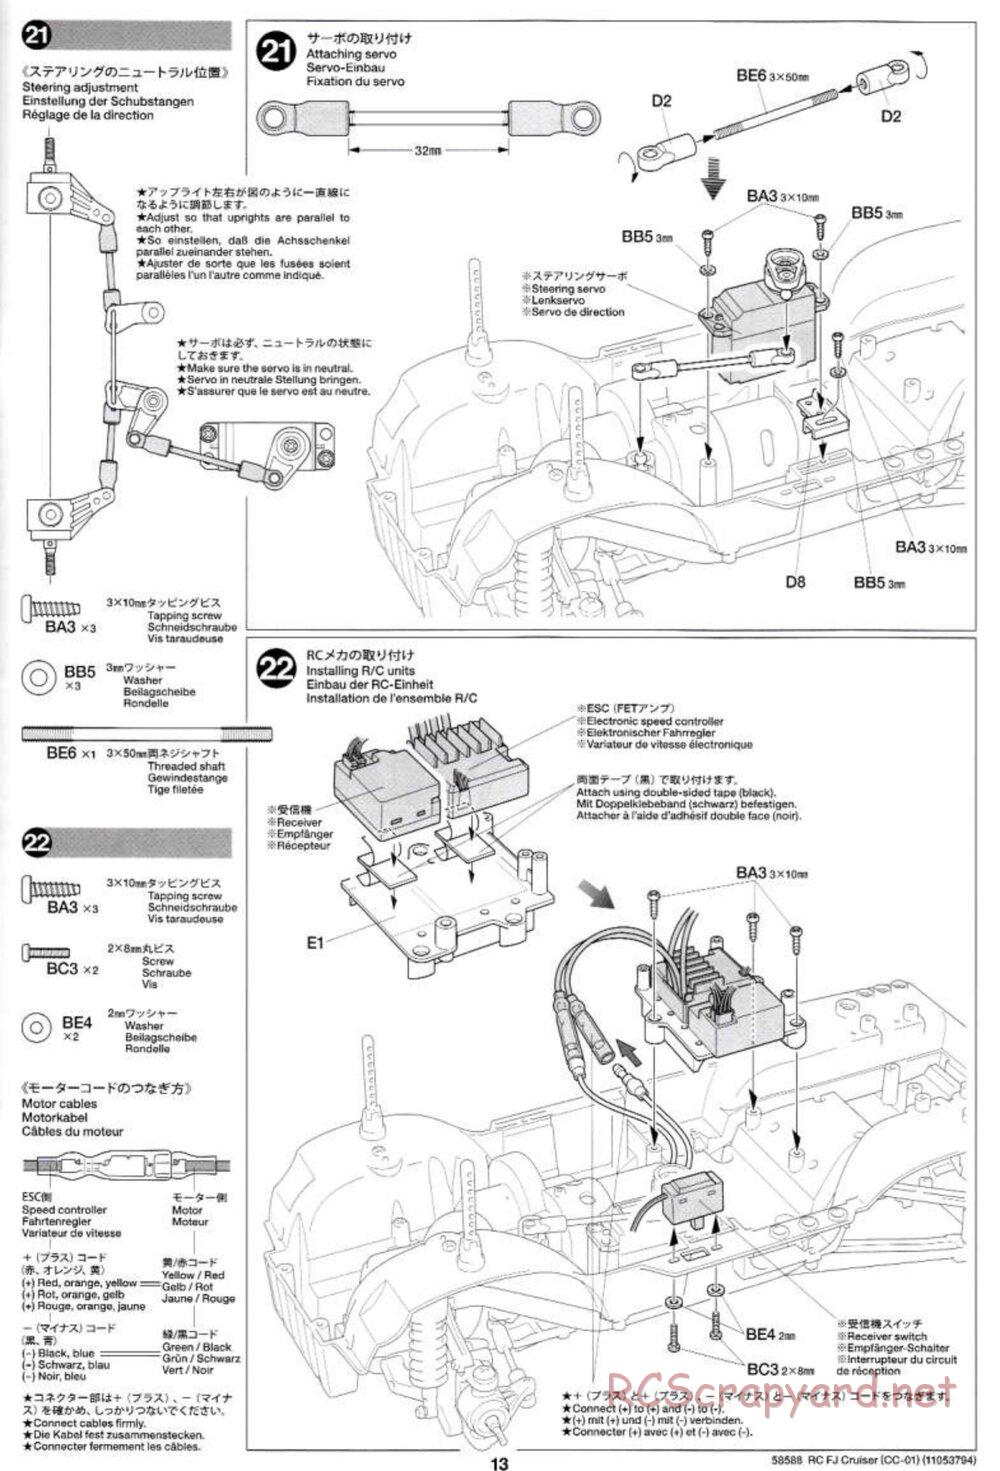 Tamiya - Toyota FJ Cruiser - CC-01 Chassis - Manual - Page 13